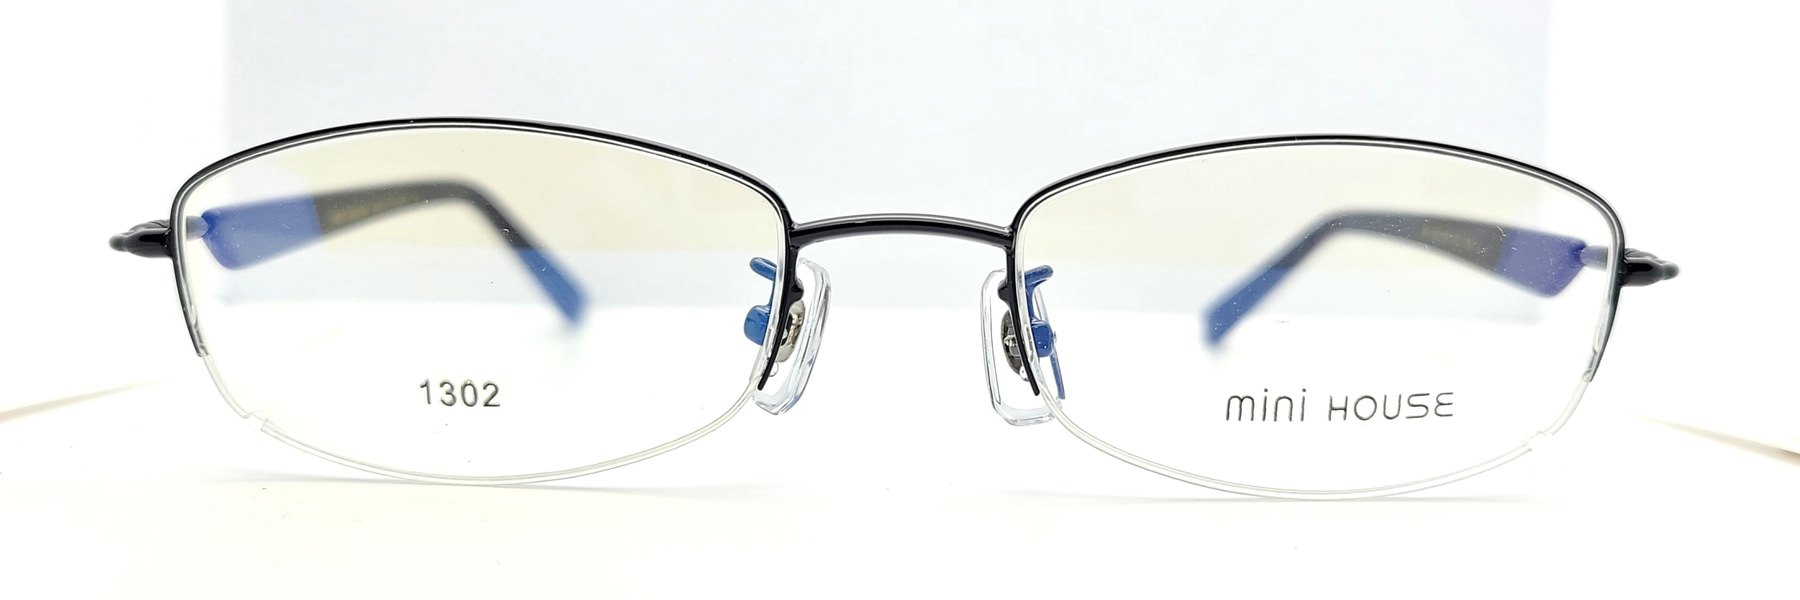 MINIHOUSE M-1302, Korean glasses, sunglasses, eyeglasses, glasses